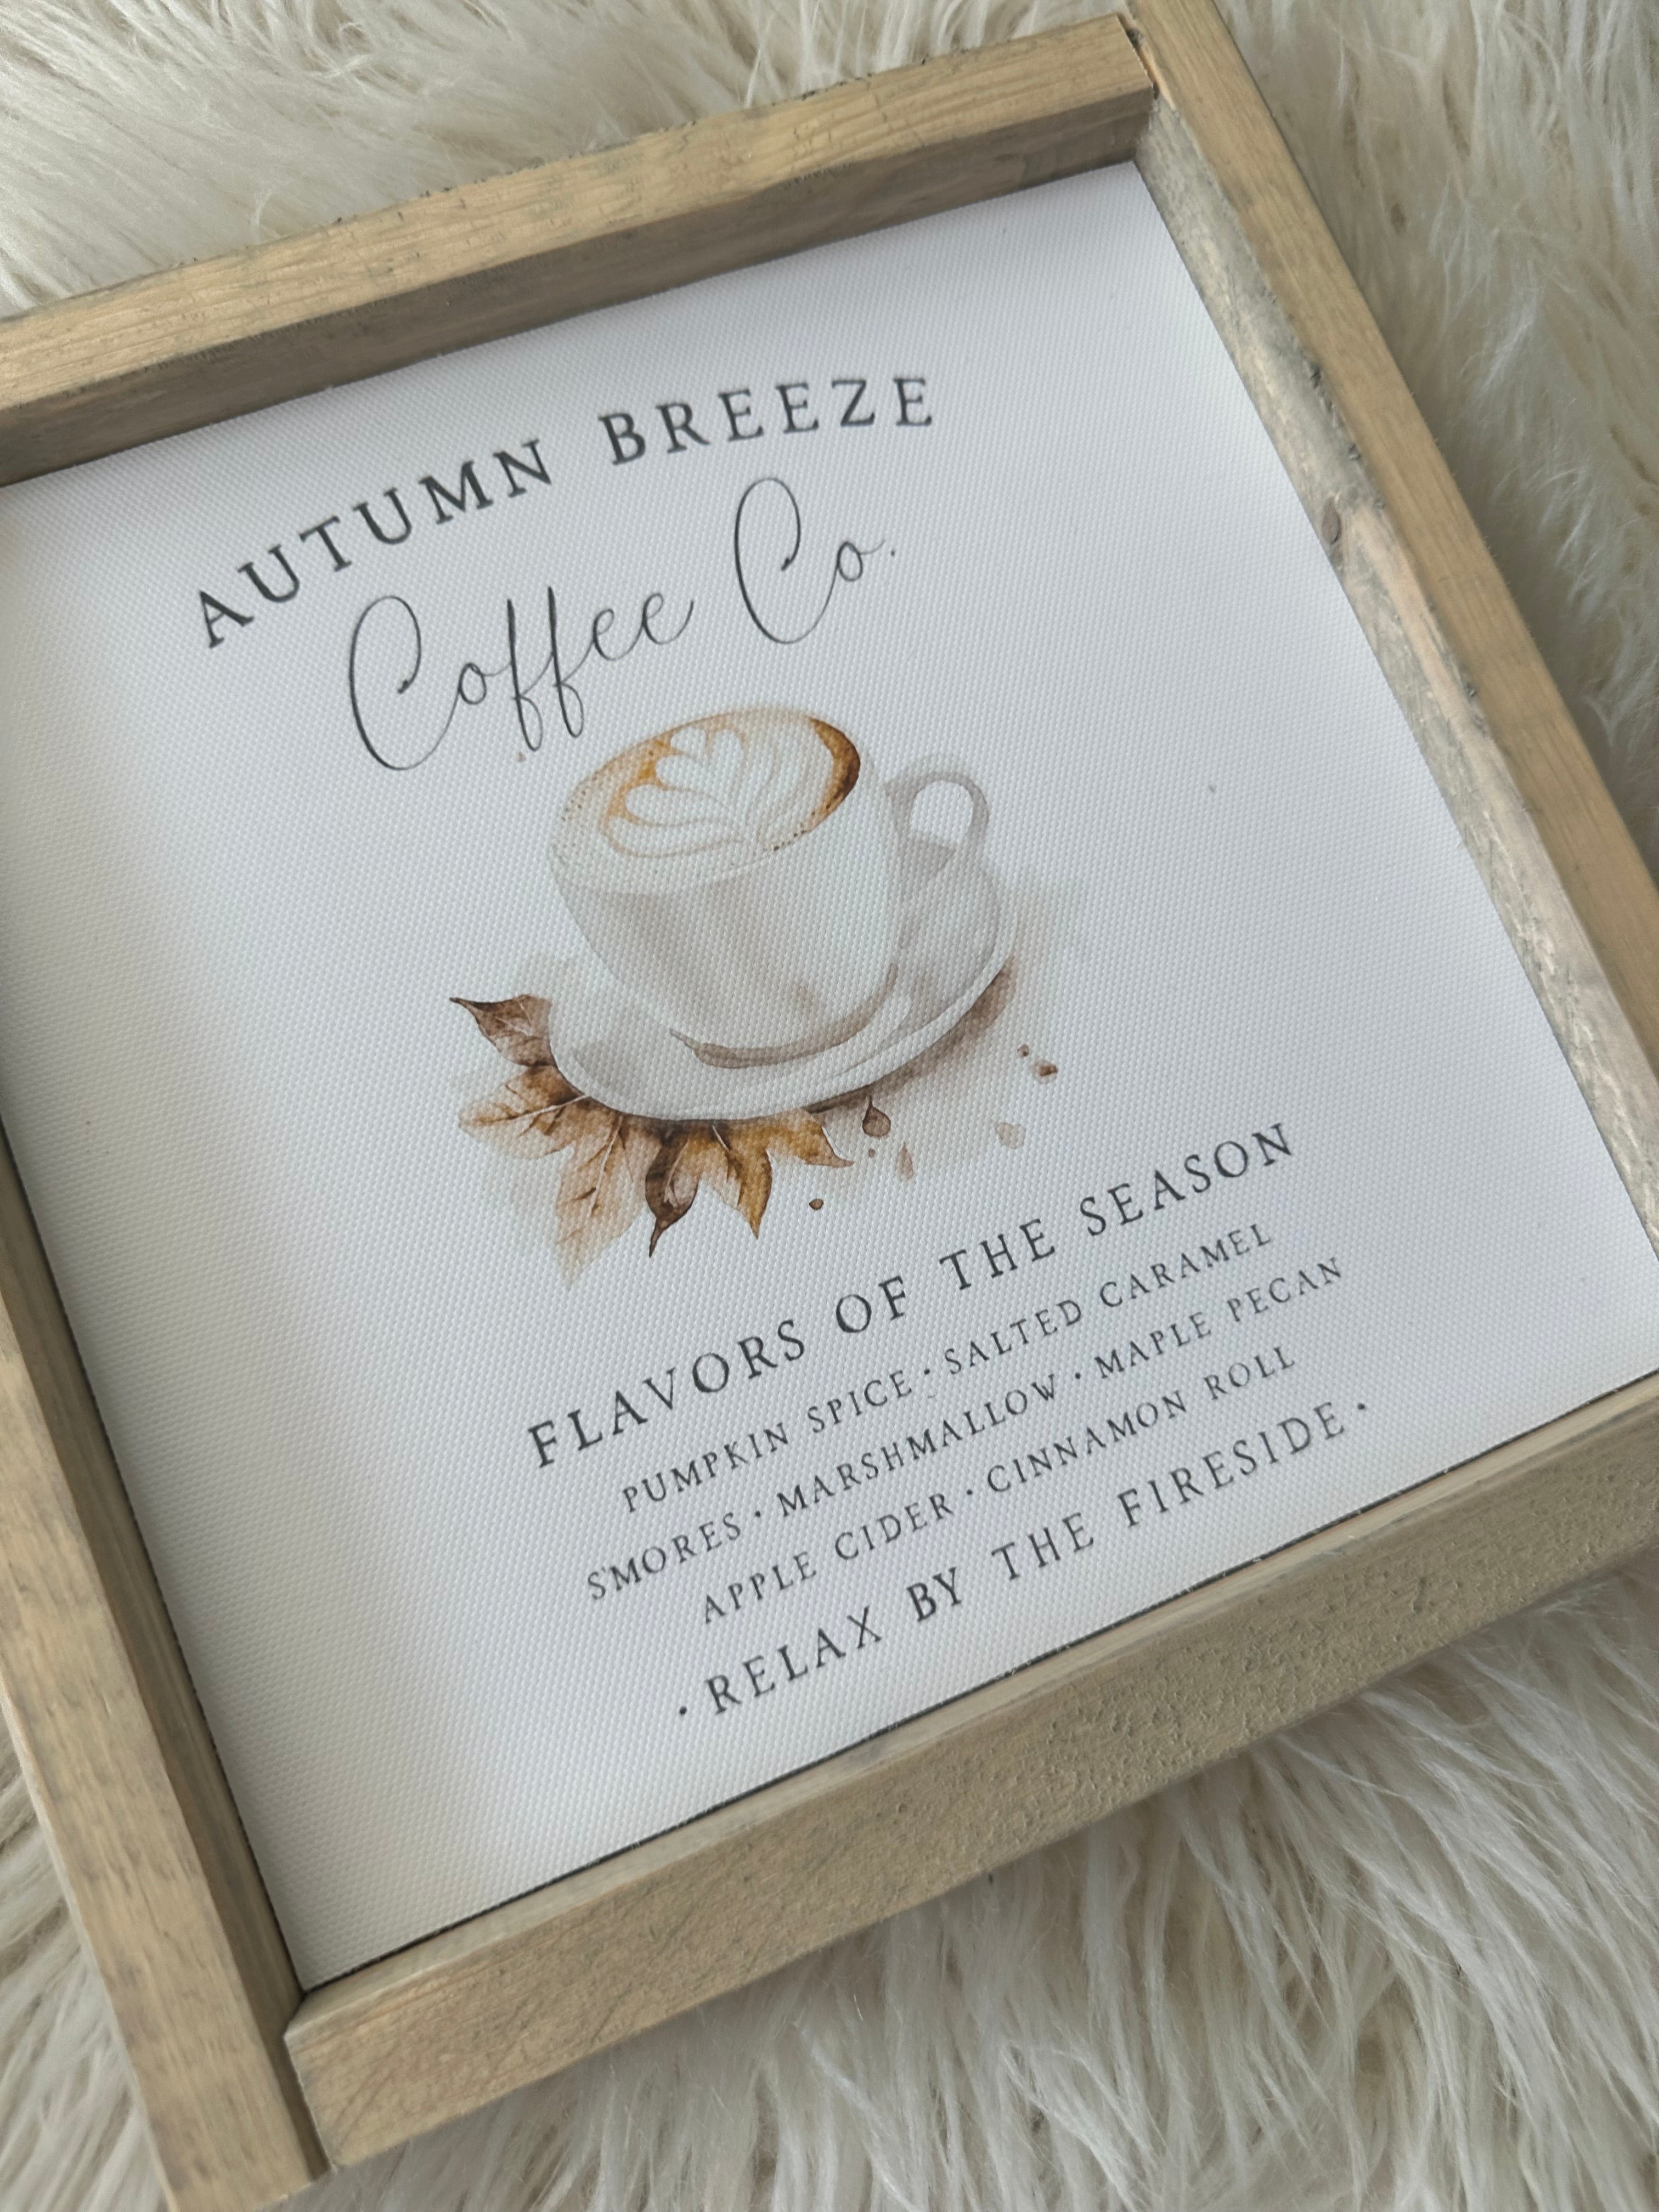 Autumn Breeze Coffee Co.